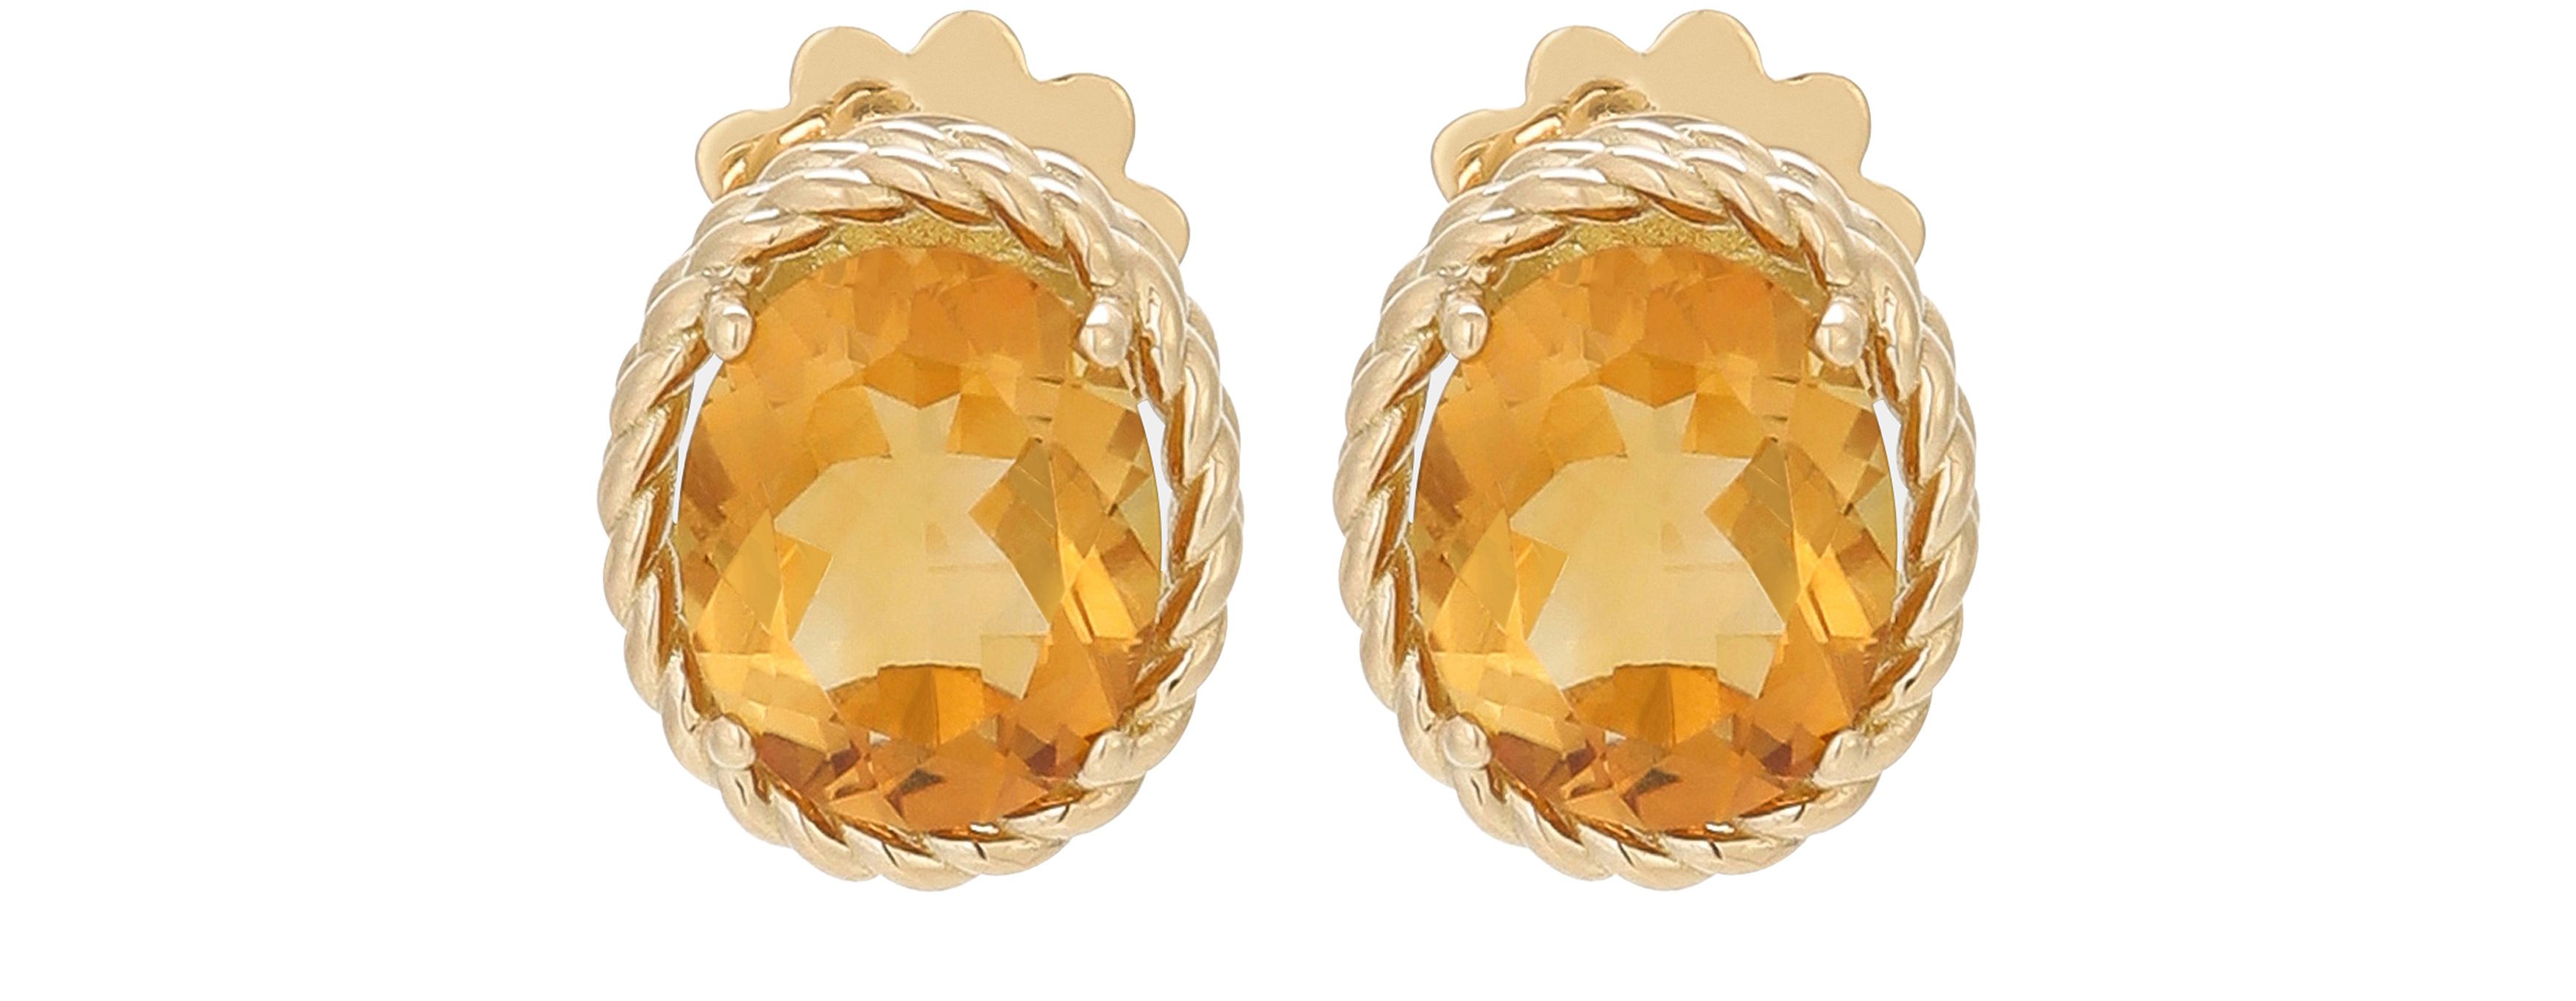 Dolce & Gabbana Anna earrings in yellow gold 18kt